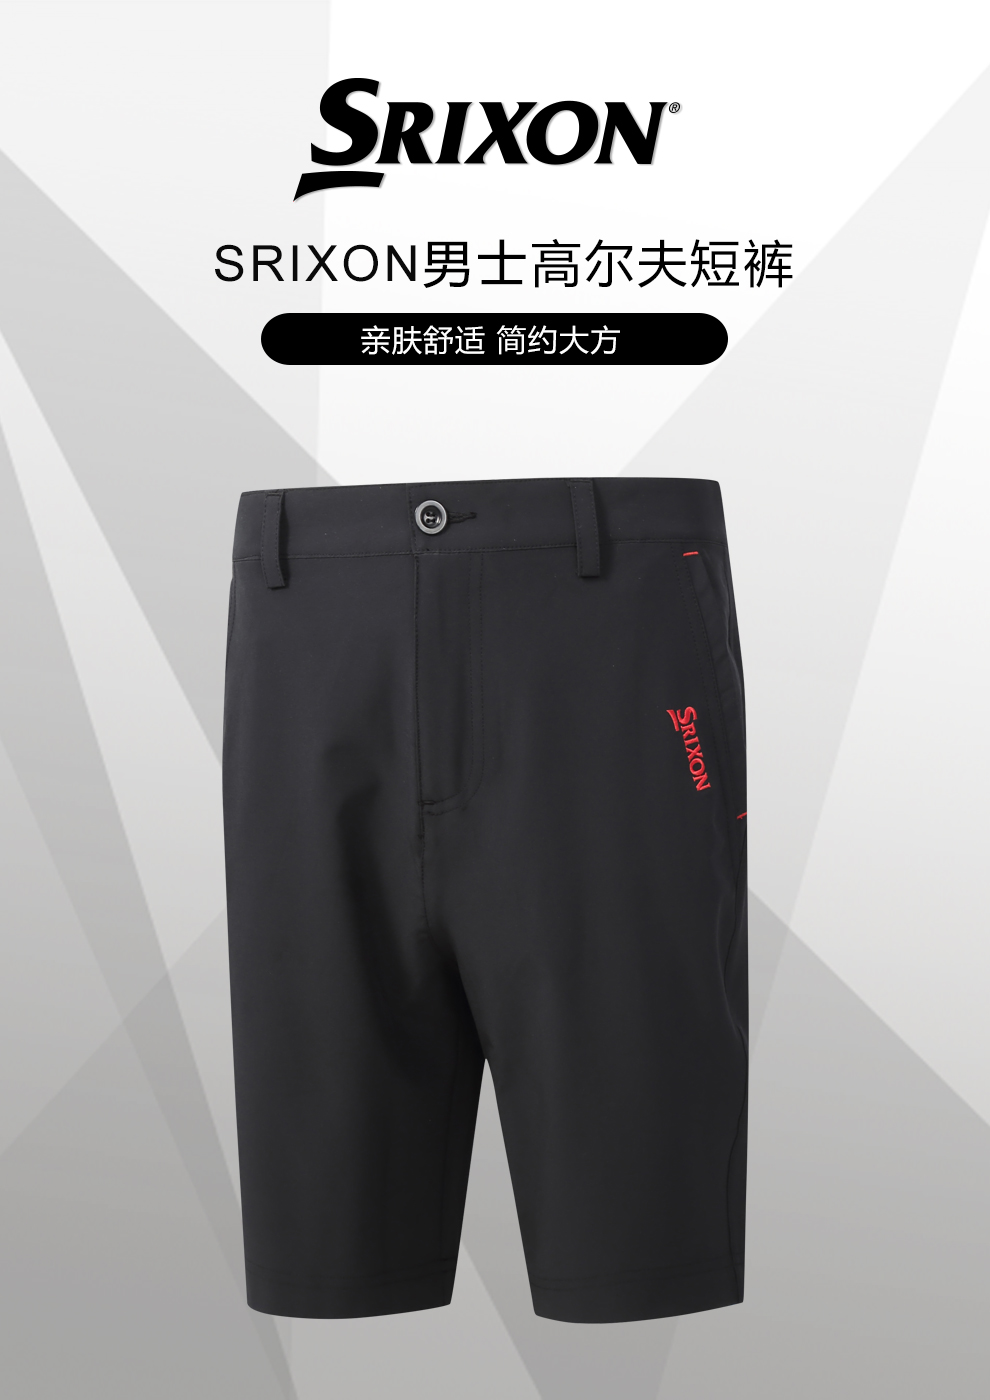 Srixon史力胜 高尔夫服装 男士 夏季短裤 golf运动休闲五分裤中裤